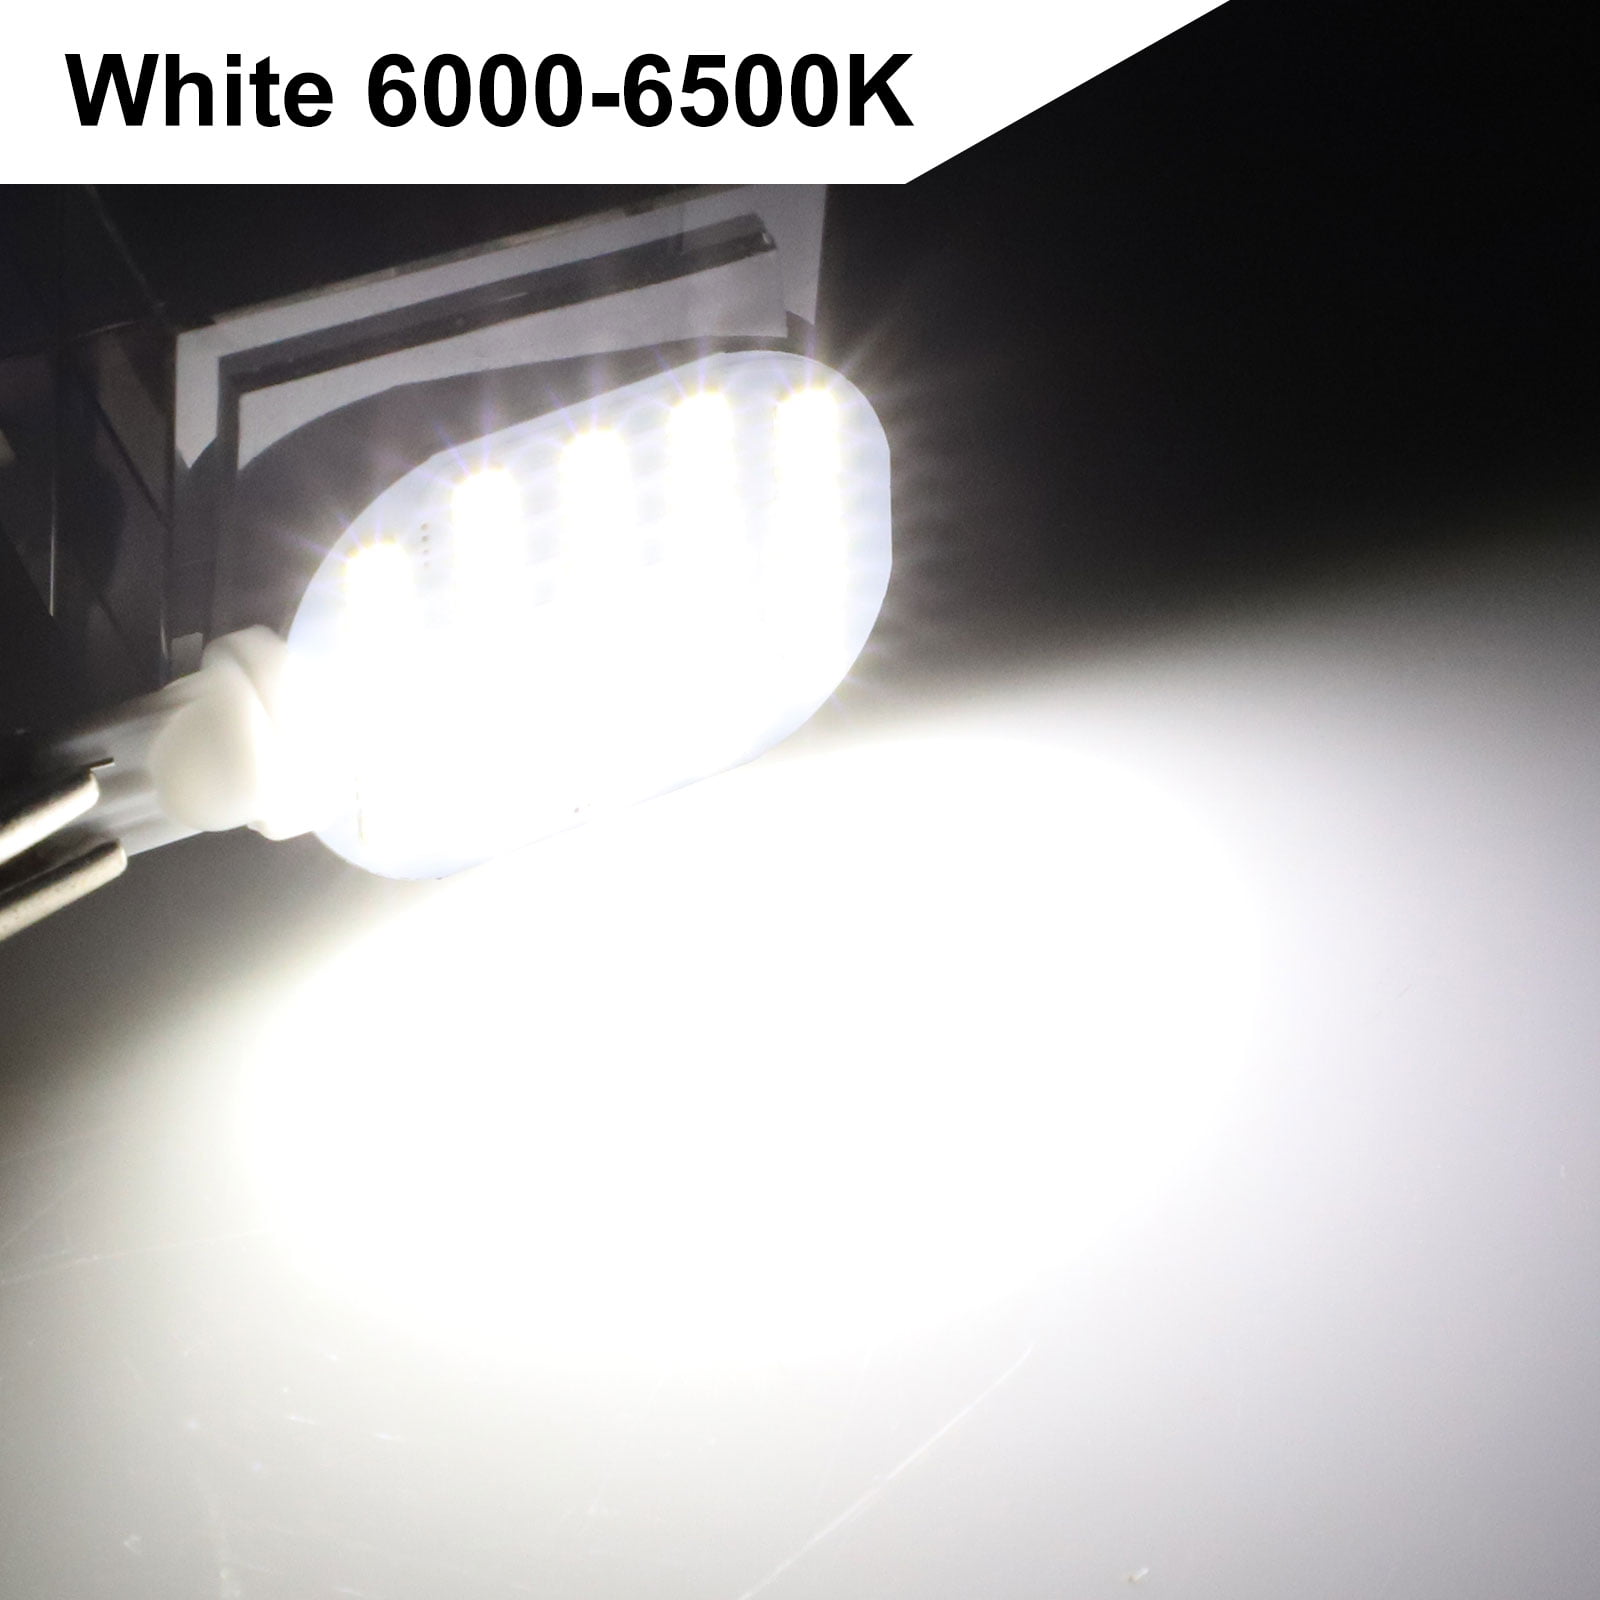 6000-6500K Color Temperature Super Bright 921 LED Bulbs for RV Indoor Lights Camper Trailer Motorhome Marine Boat Dome Interior Light Pack of 10, Super White Pack of 20, 6000K White 